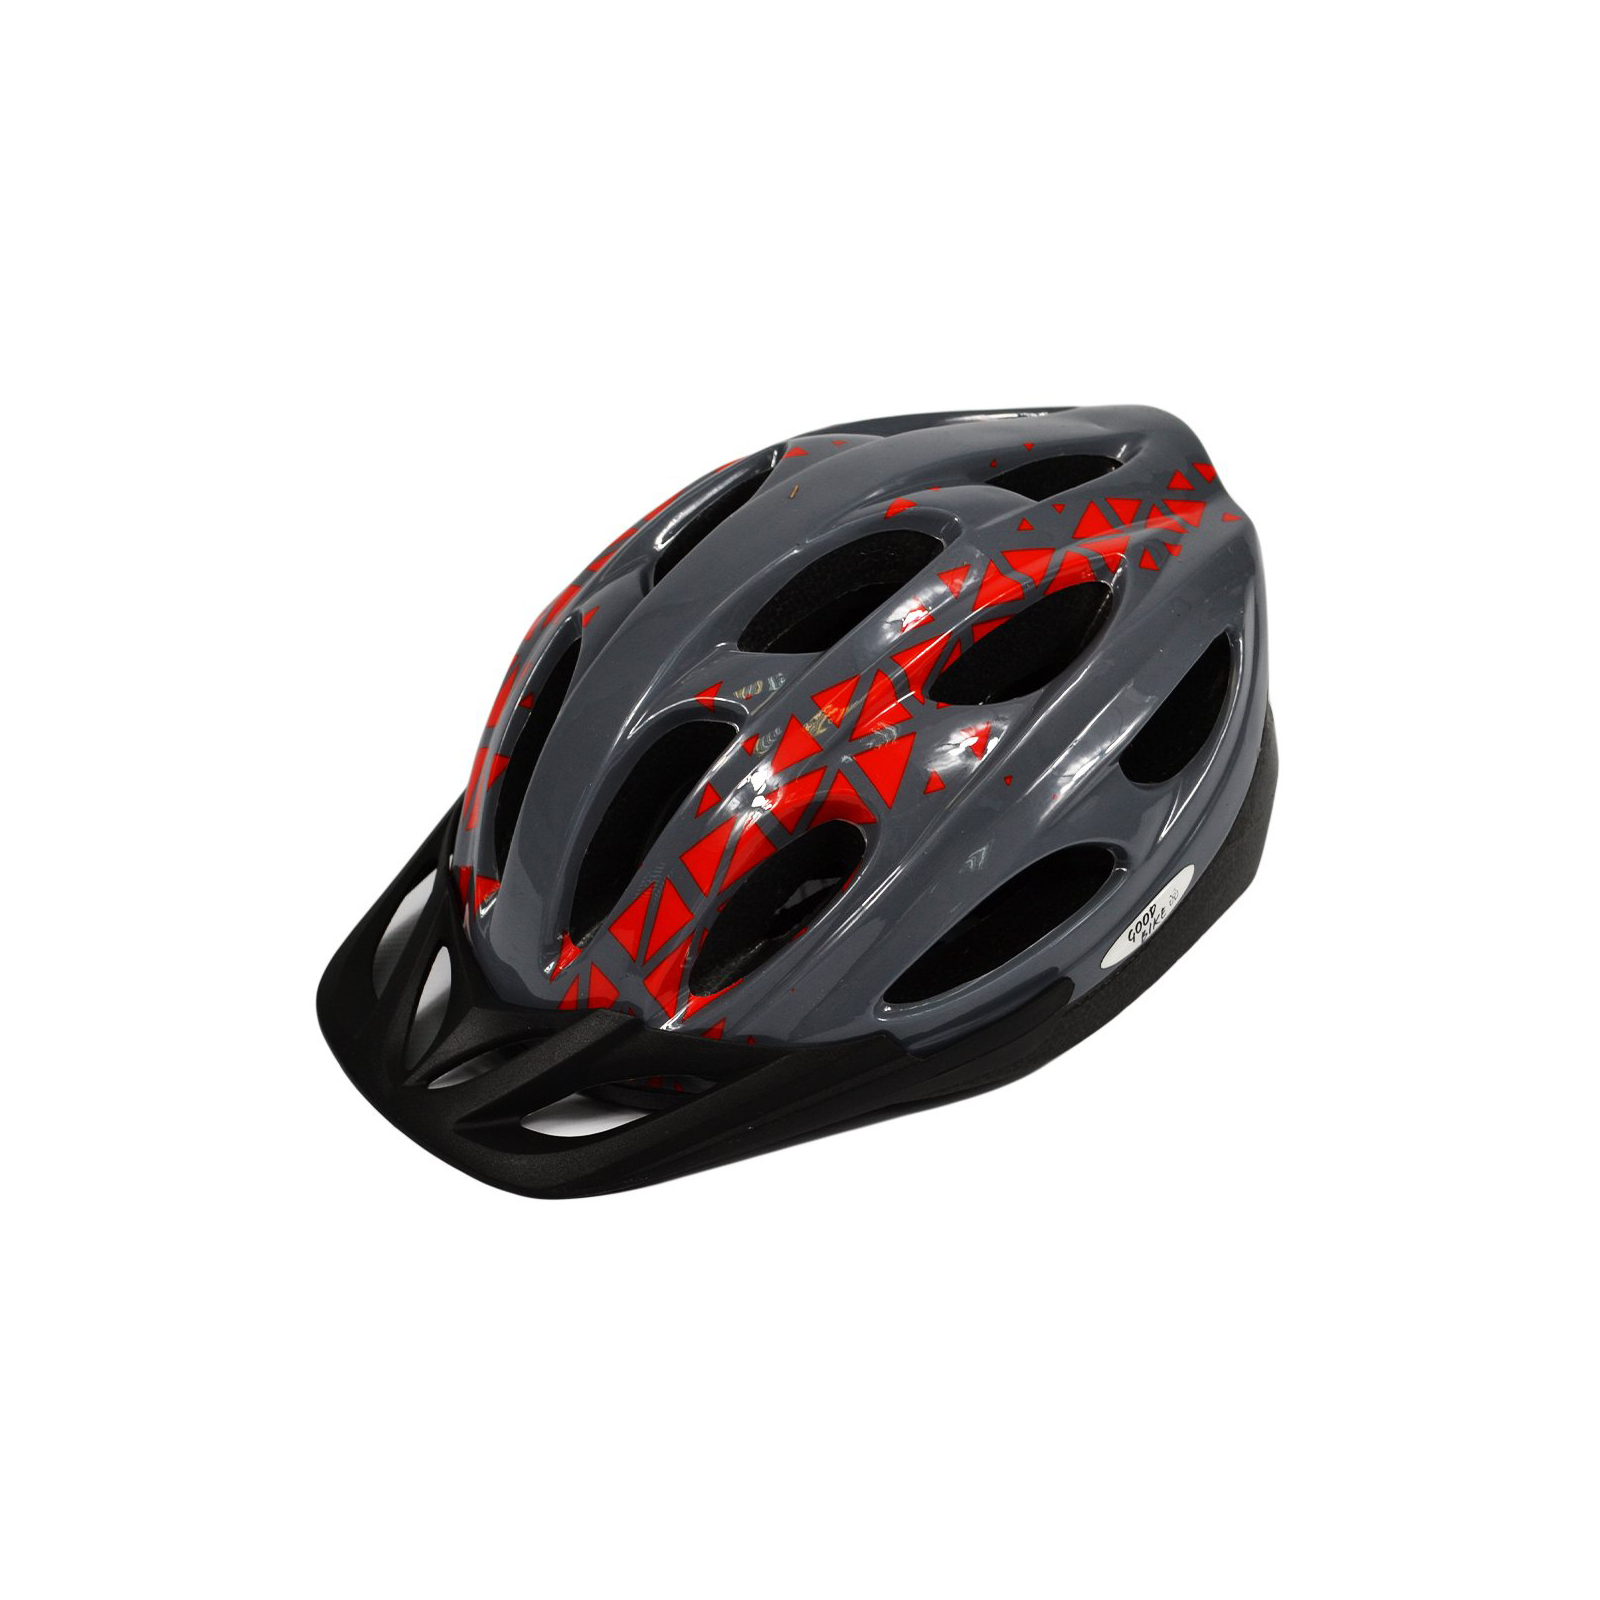 Шлем Good Bike M 56-58 см Pink (88854/1-IS) изображение 3